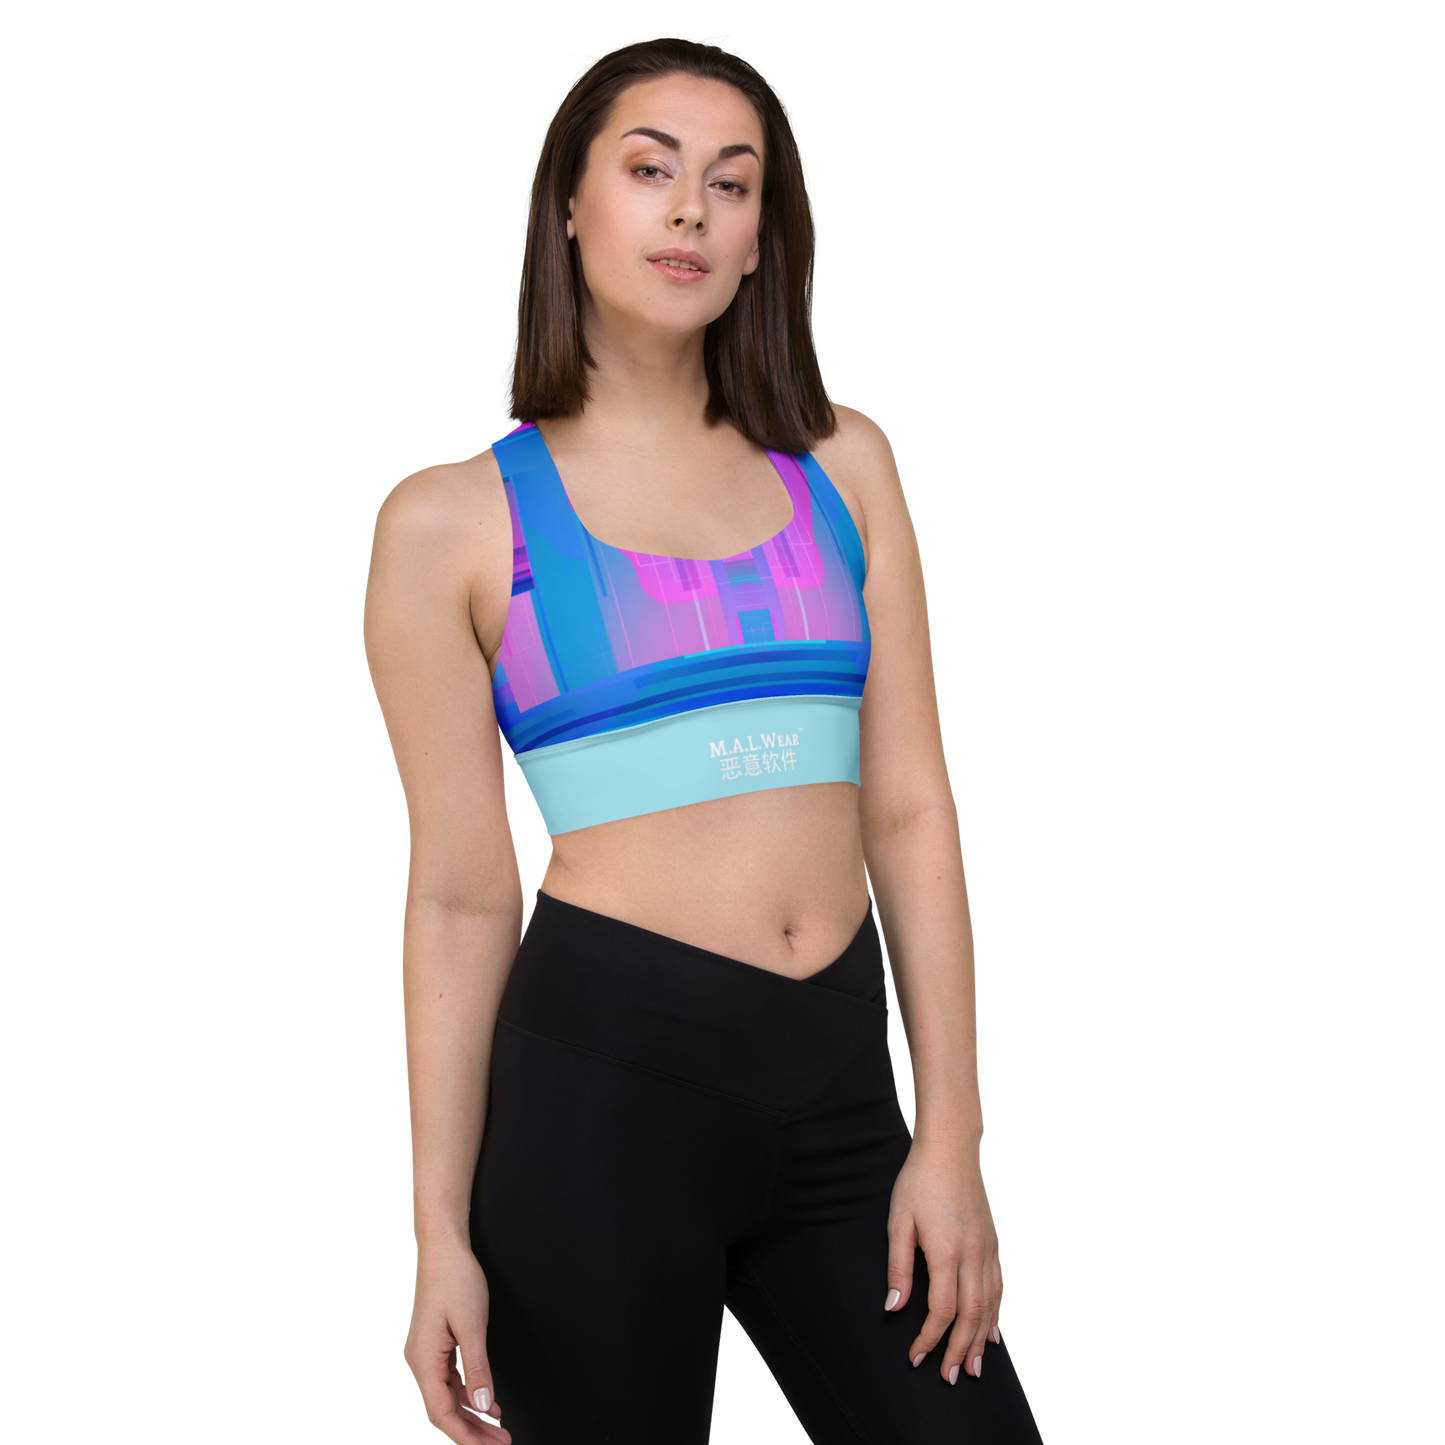 Dropped Screen Glitch Longline Sports/Yoga bra